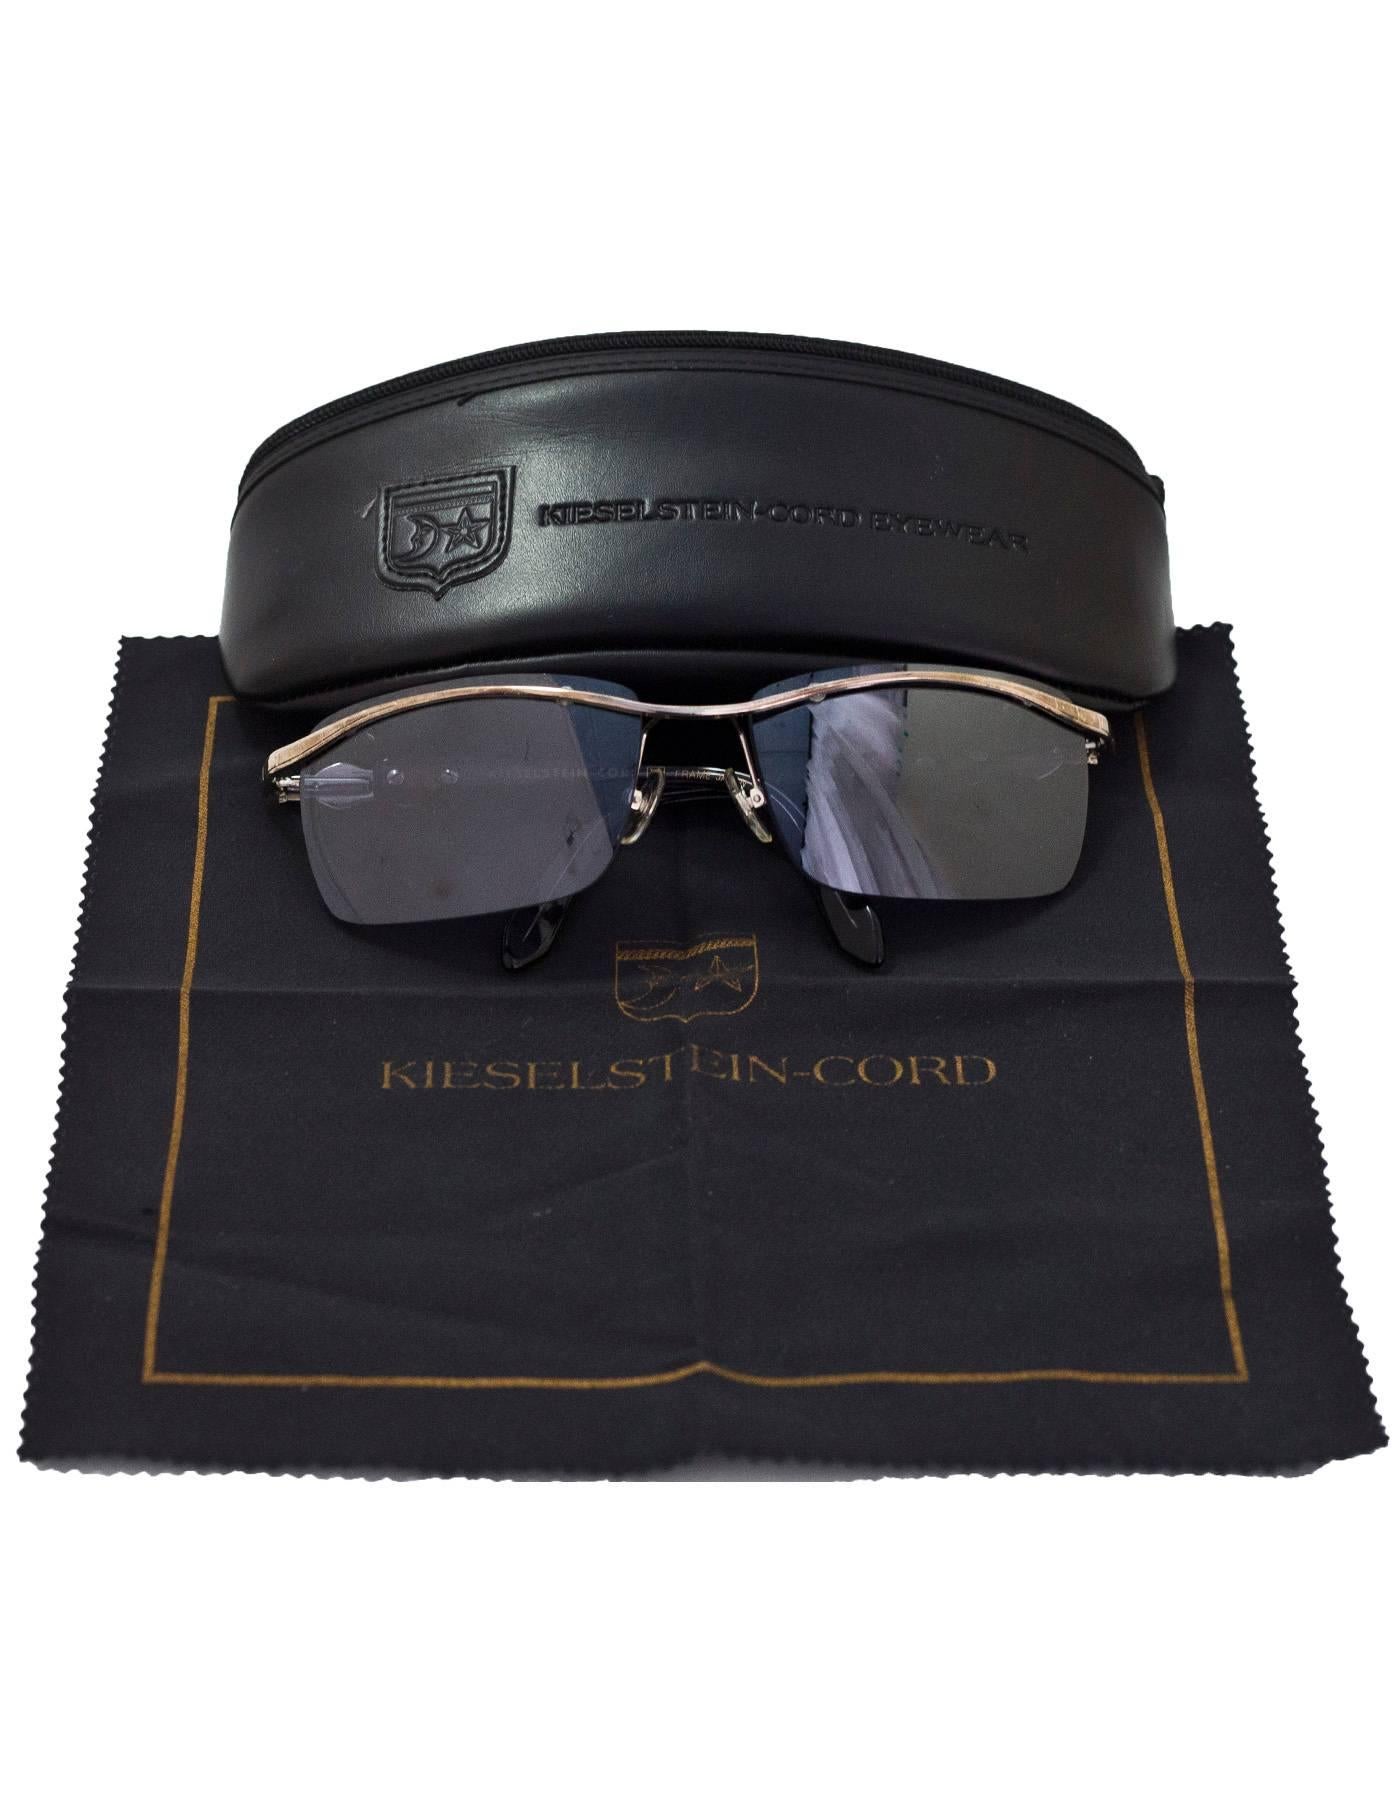 Kieselstein-Cord Black Super Star Mirrored Sunglasses with Case 3